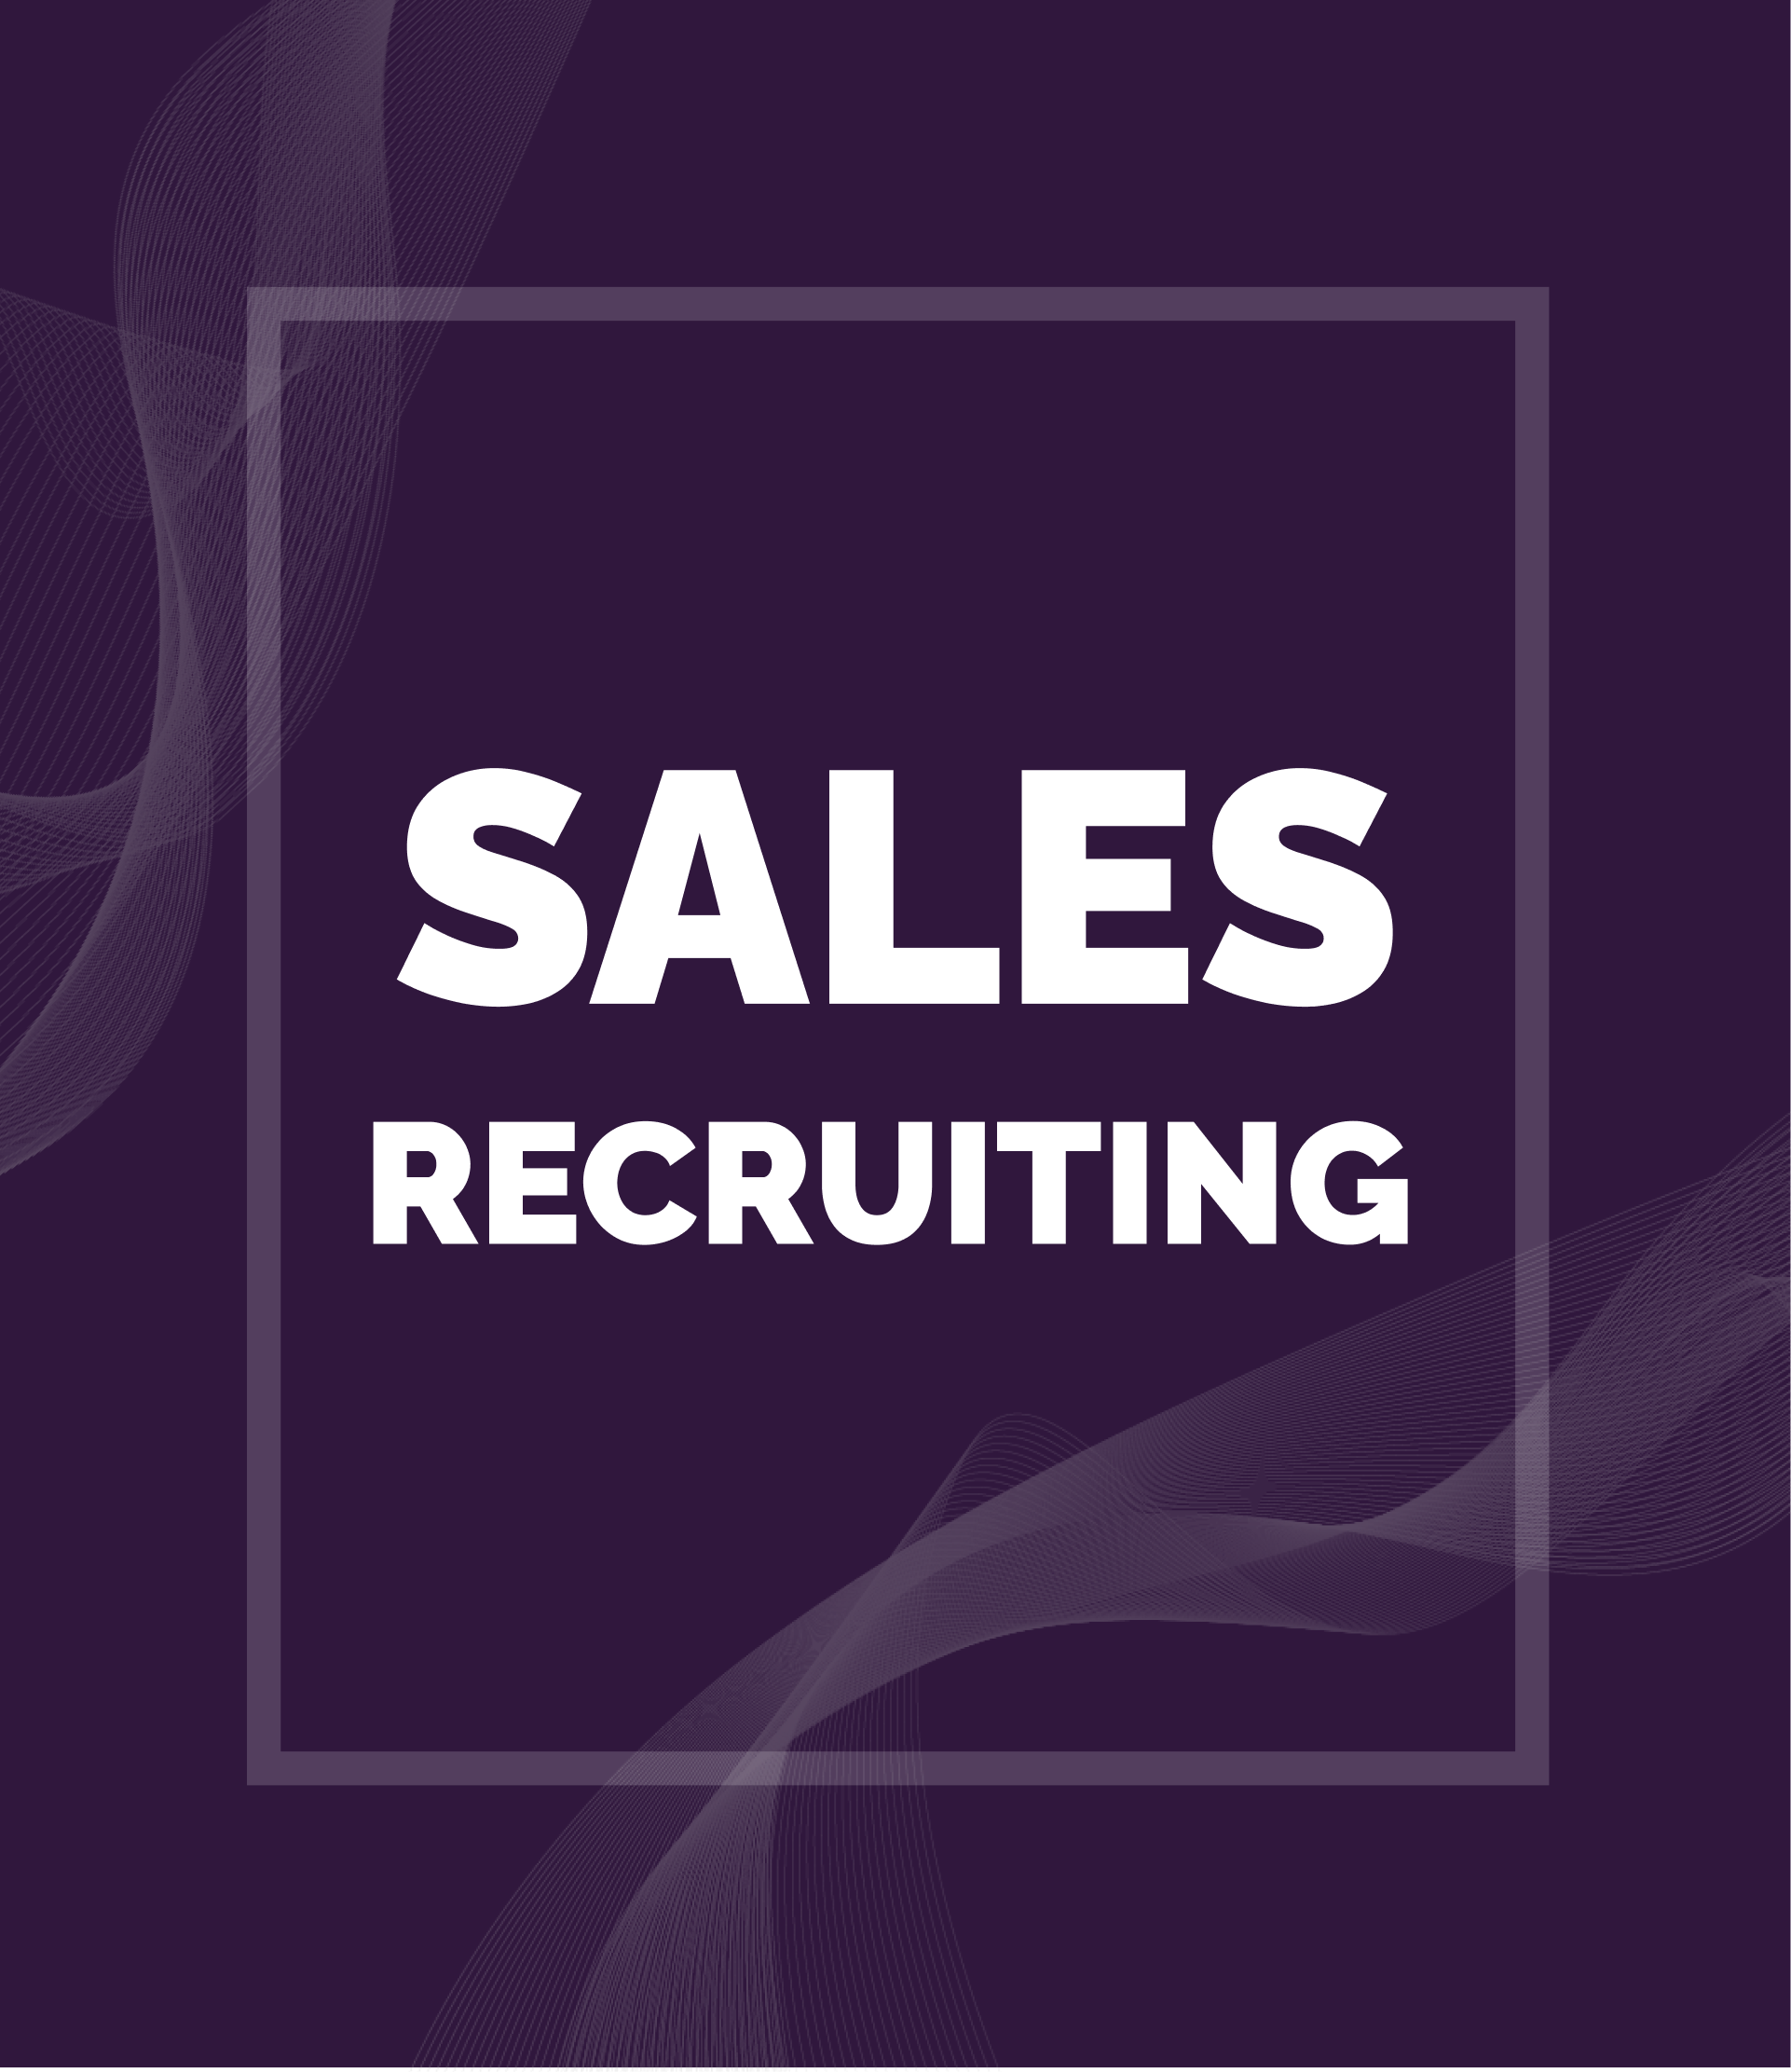 Sales recruiting